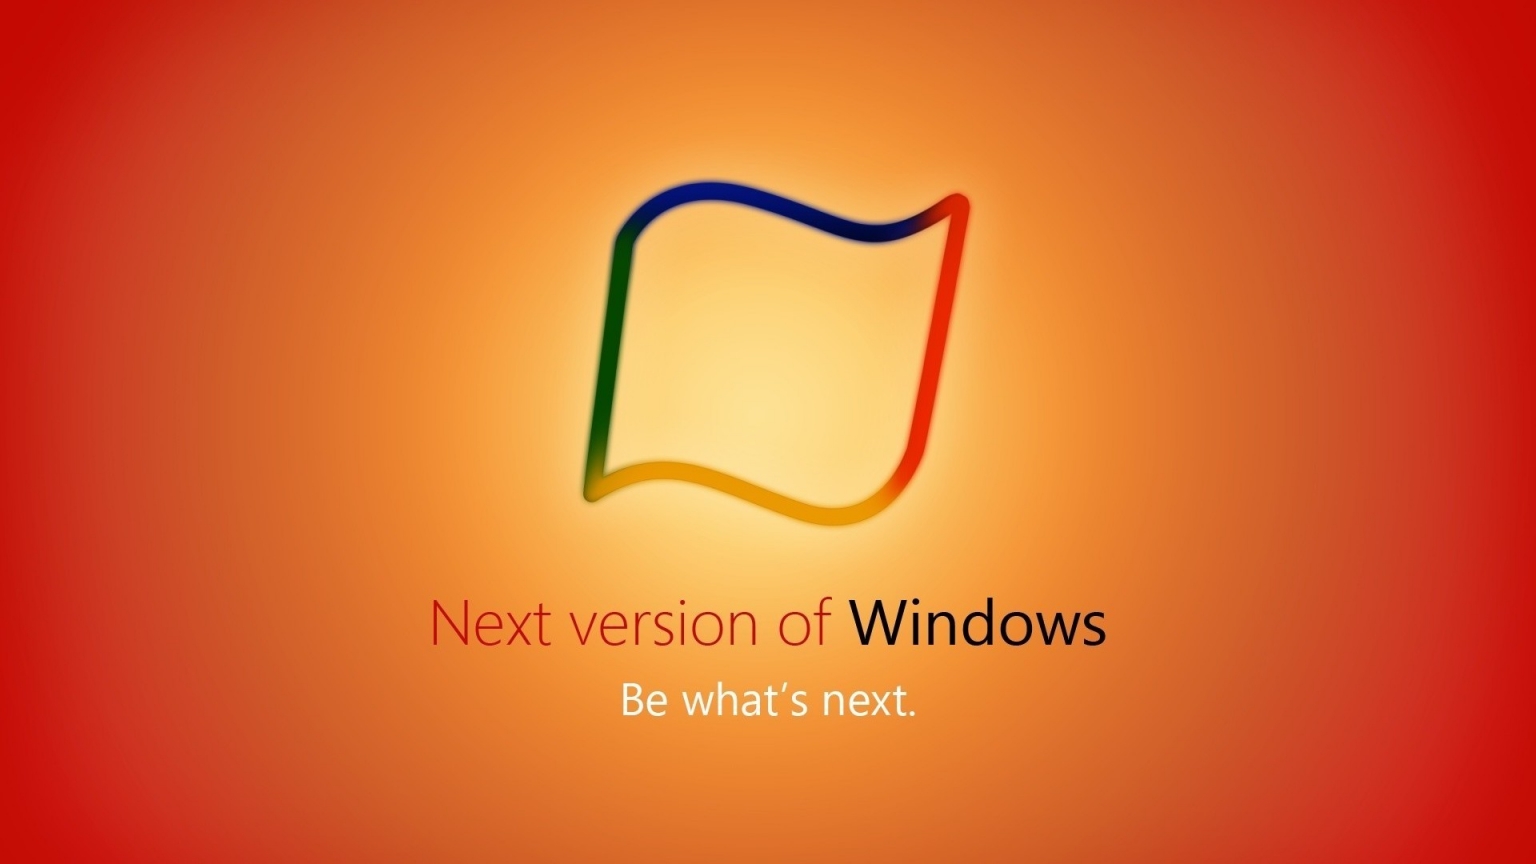 Next Version of Windows for 1536 x 864 HDTV resolution